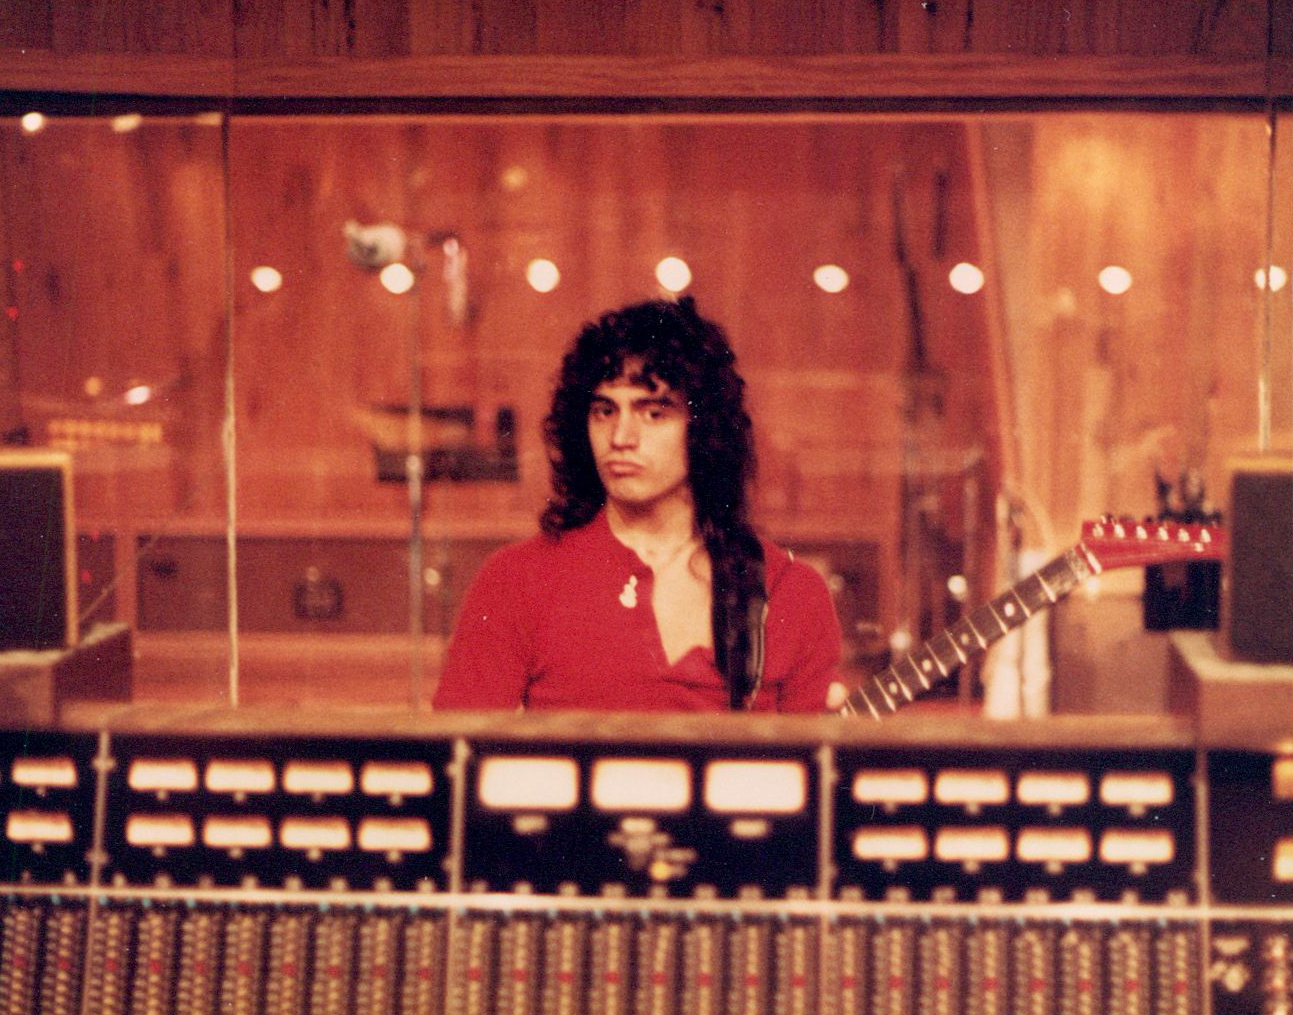 Gerard de Marigny recording at The Record Plant Studios (Studio C) in NYC - c. 1980.